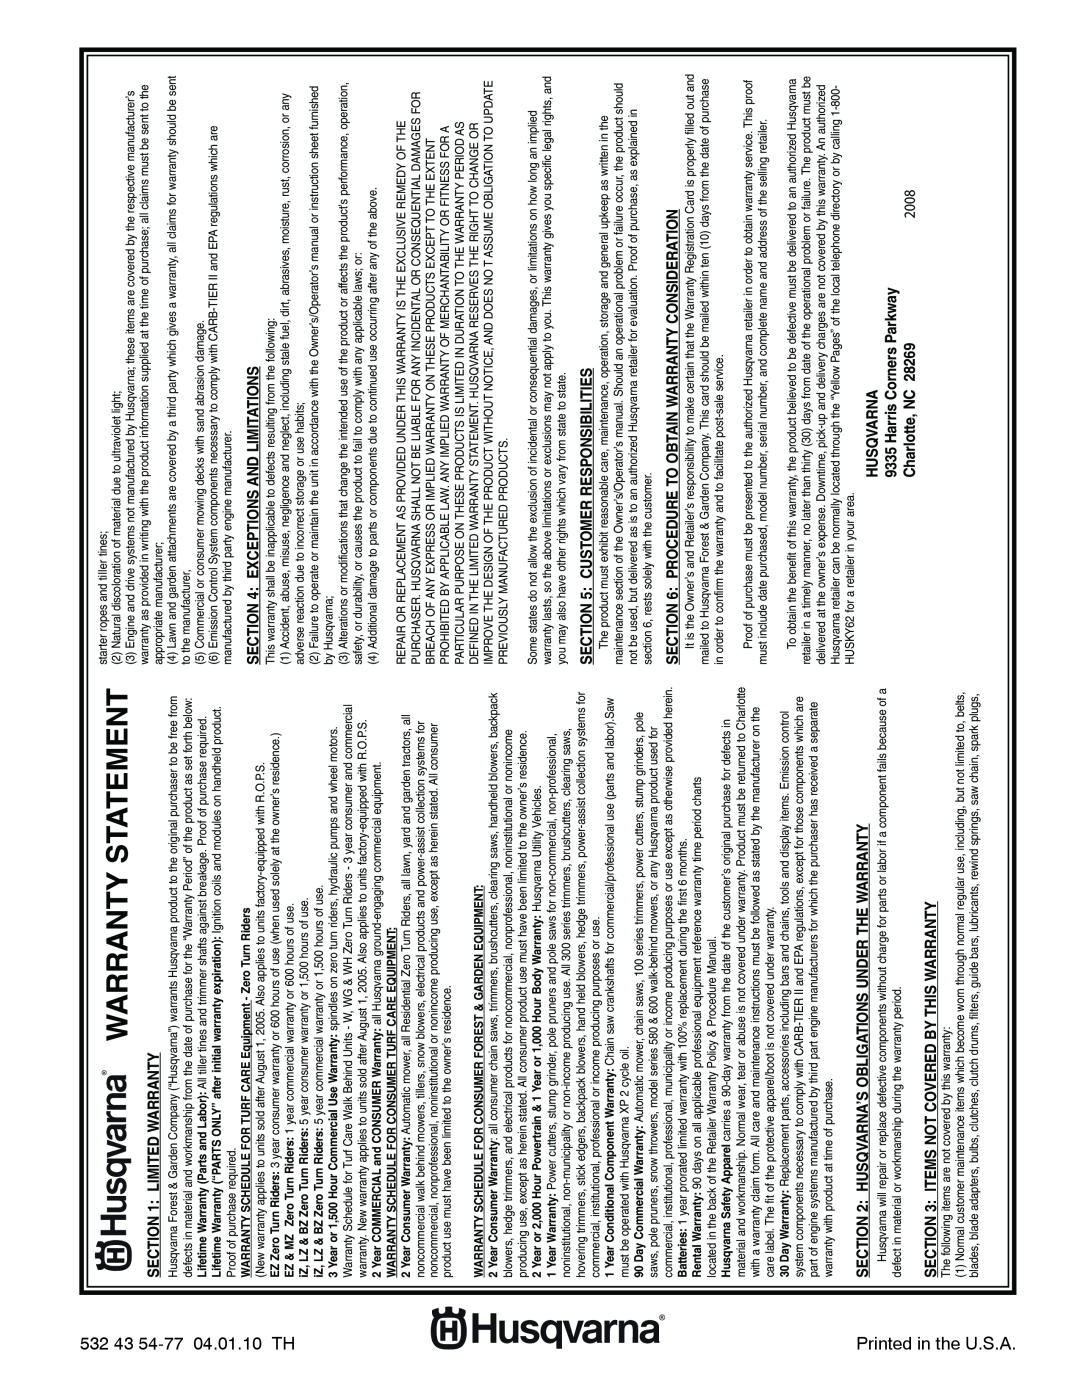 Husqvarna 96193005200, 924HV Warranty Statement, 2008, Charlotte, NC, Warranty Schedule For Consumer Turf Care Equipment 